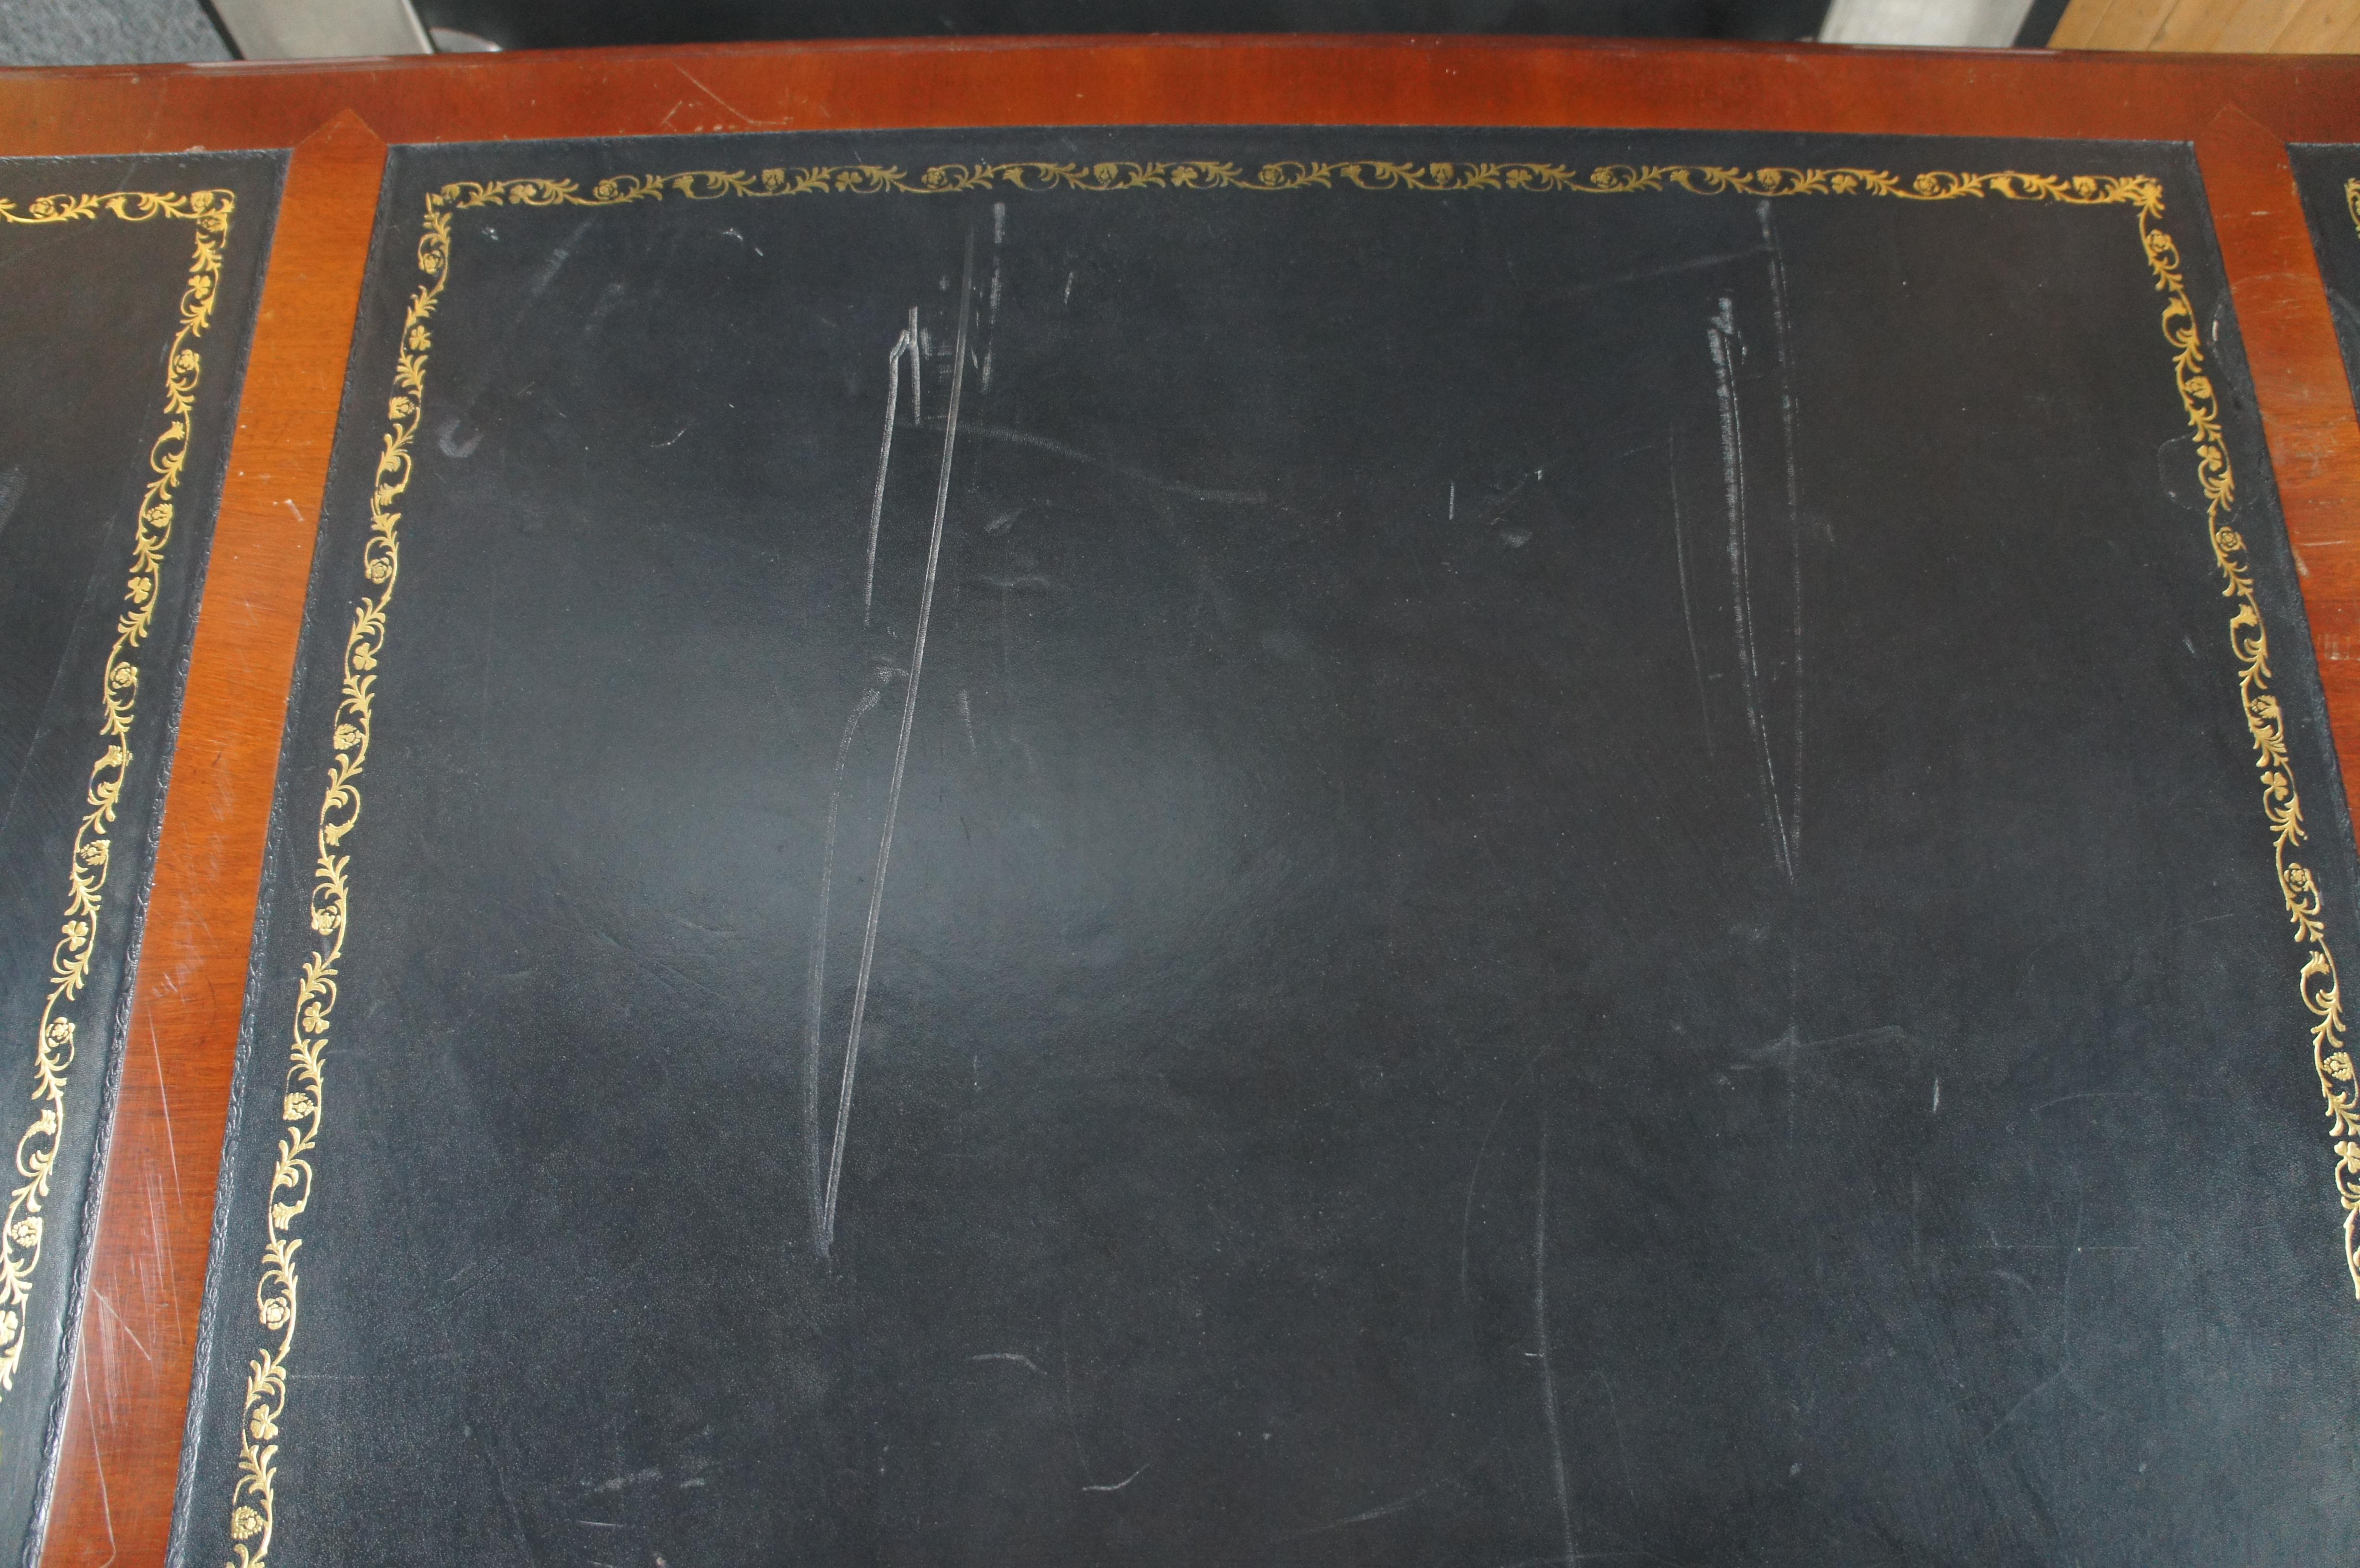 Cuir Arthur Brett English Traditional Mahogany Tooled Leather Top Executive Desk 72